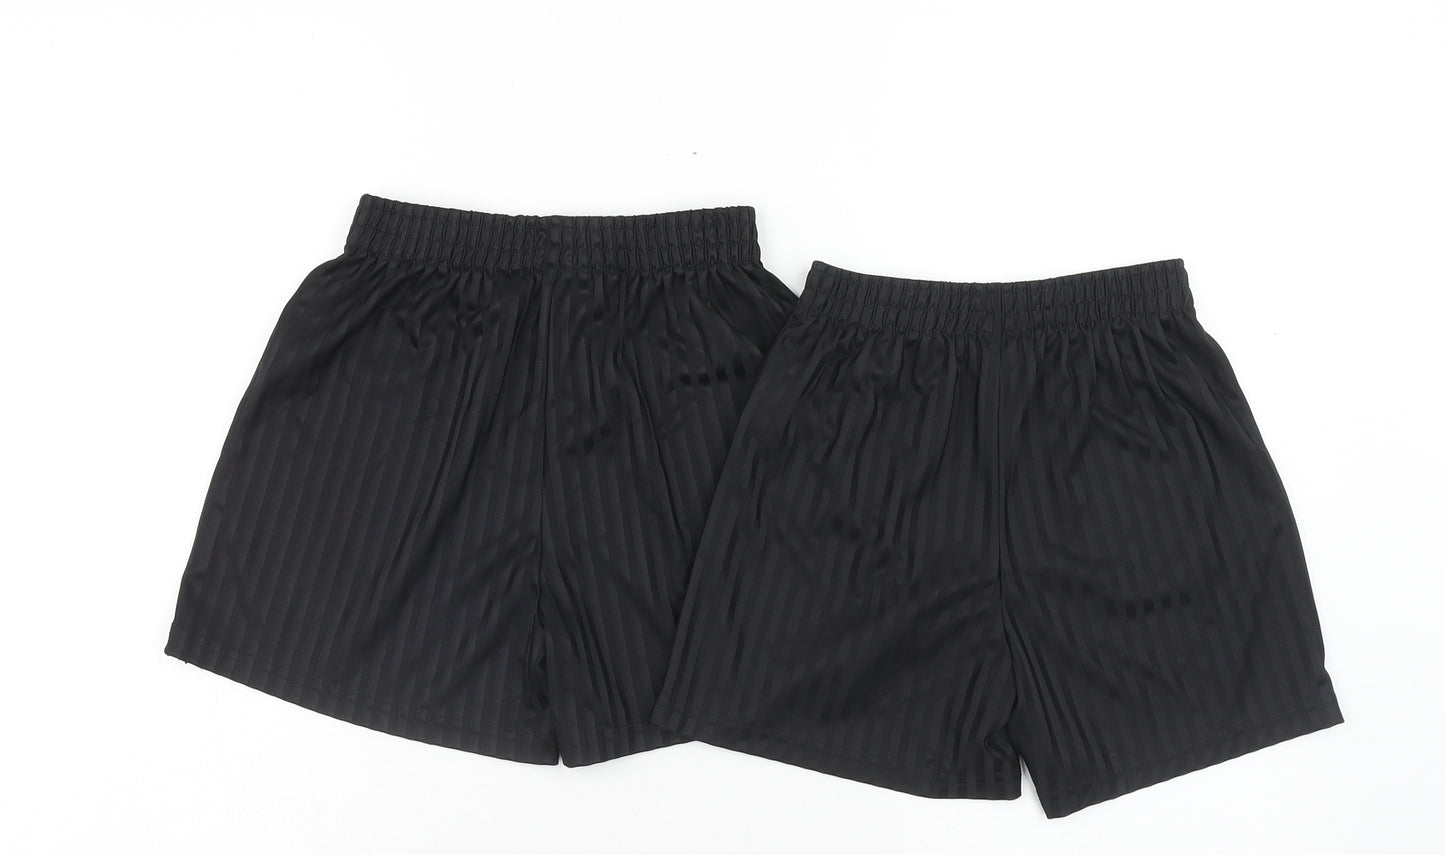 Nutmeg Boys Black Striped Polyester Sweat Shorts Size 9-10 Years Regular Drawstring - 2 Piece Shorts Set